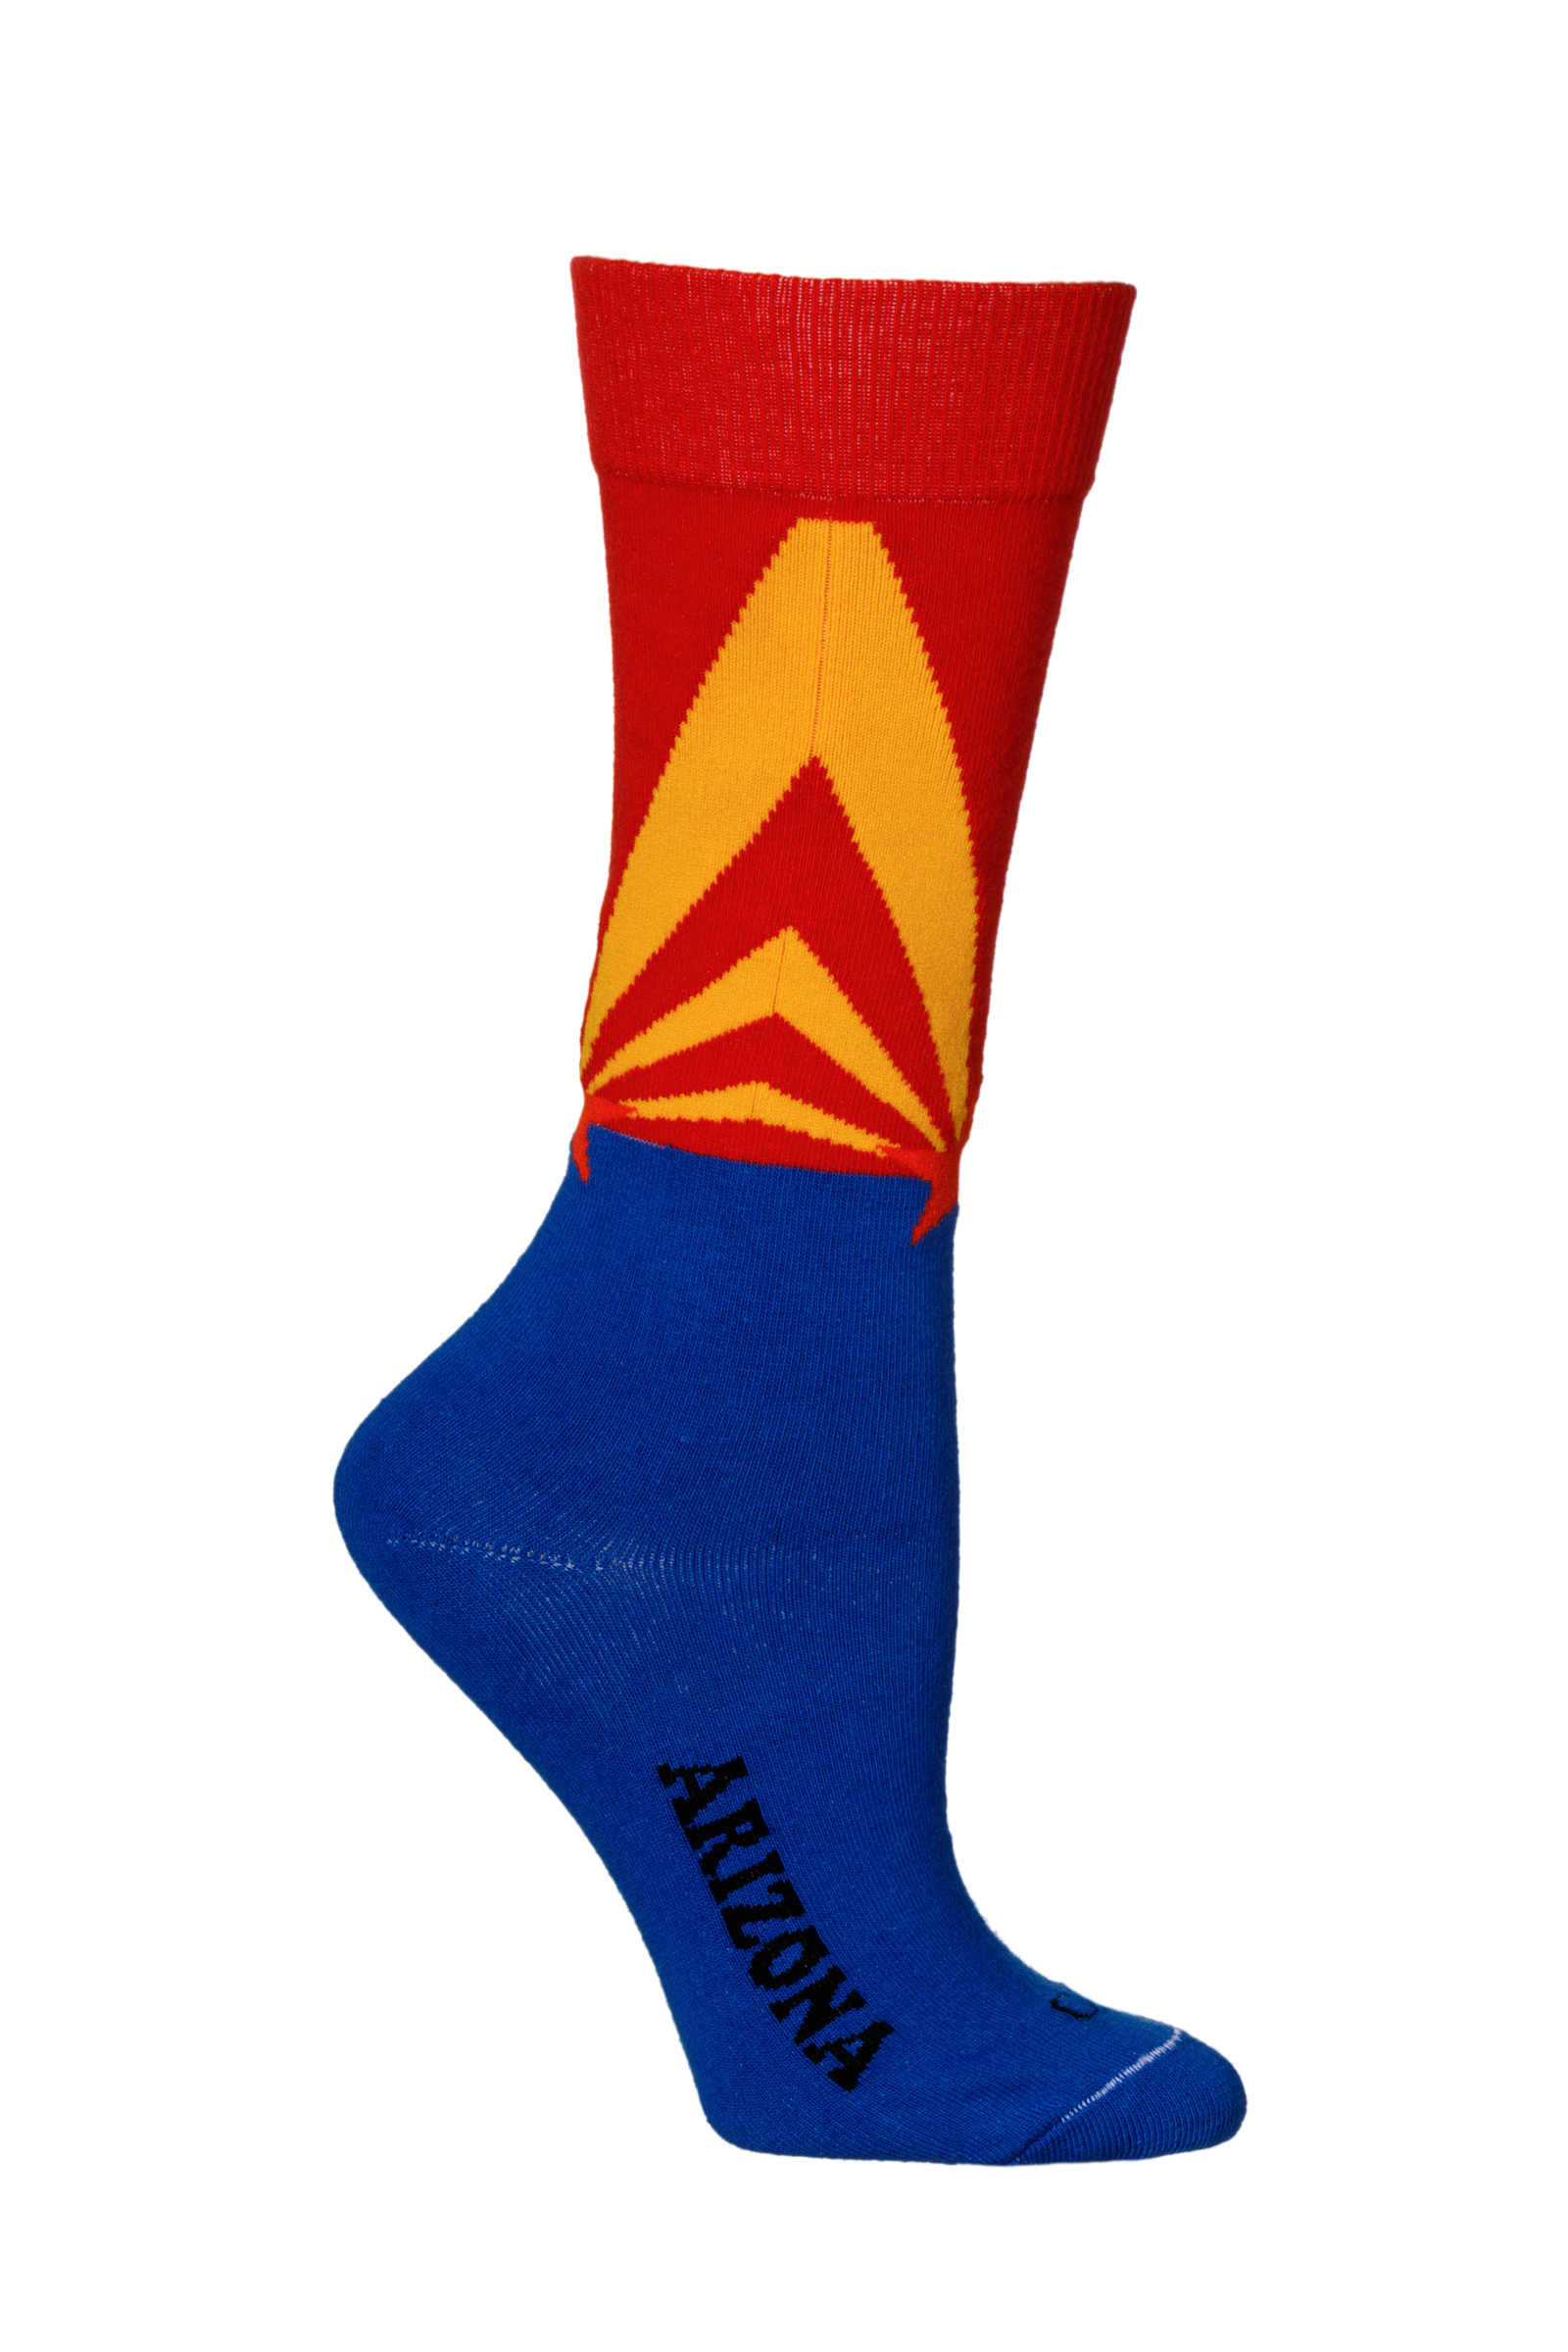 Arizona State | Merica Flag Socks